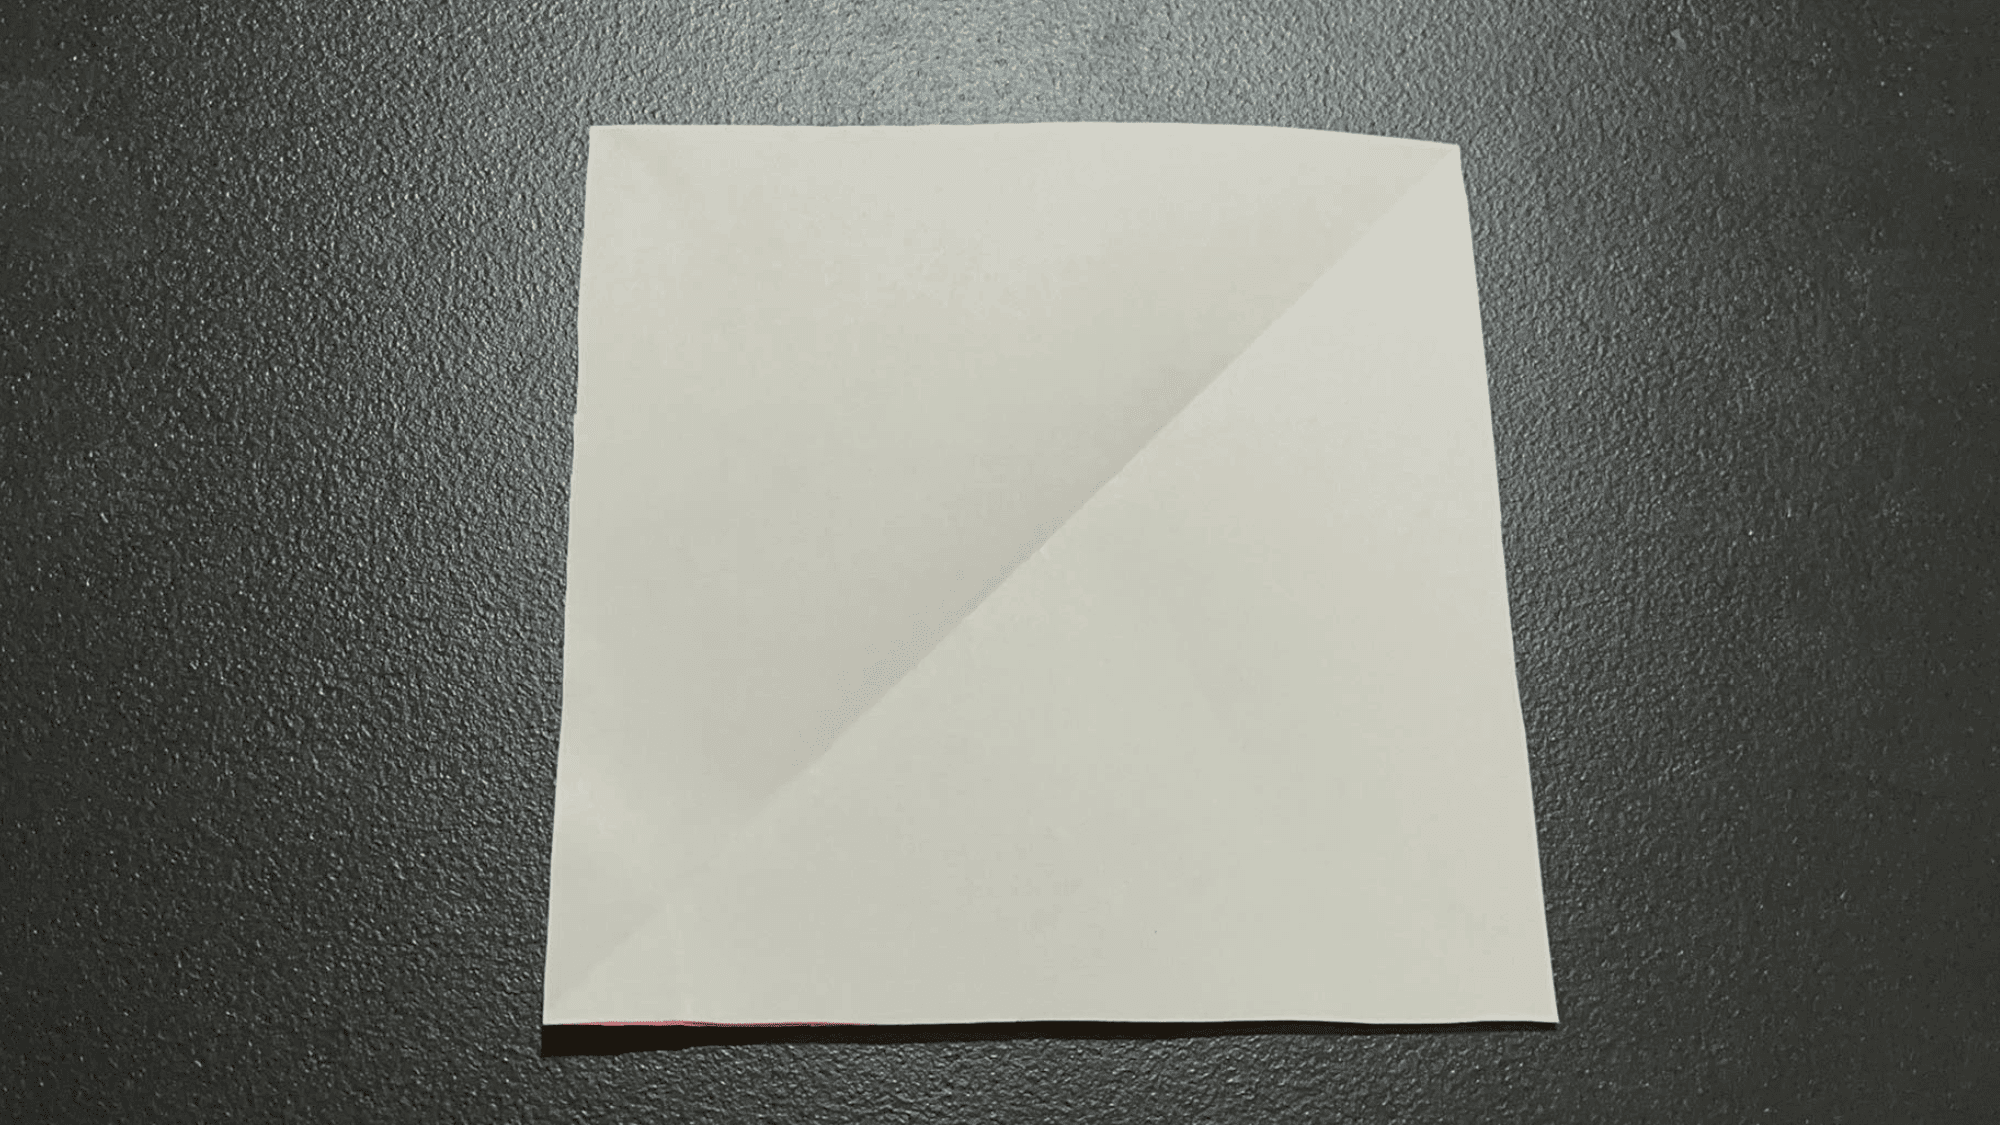 Origami Santa Claus Instructions Step 2.1